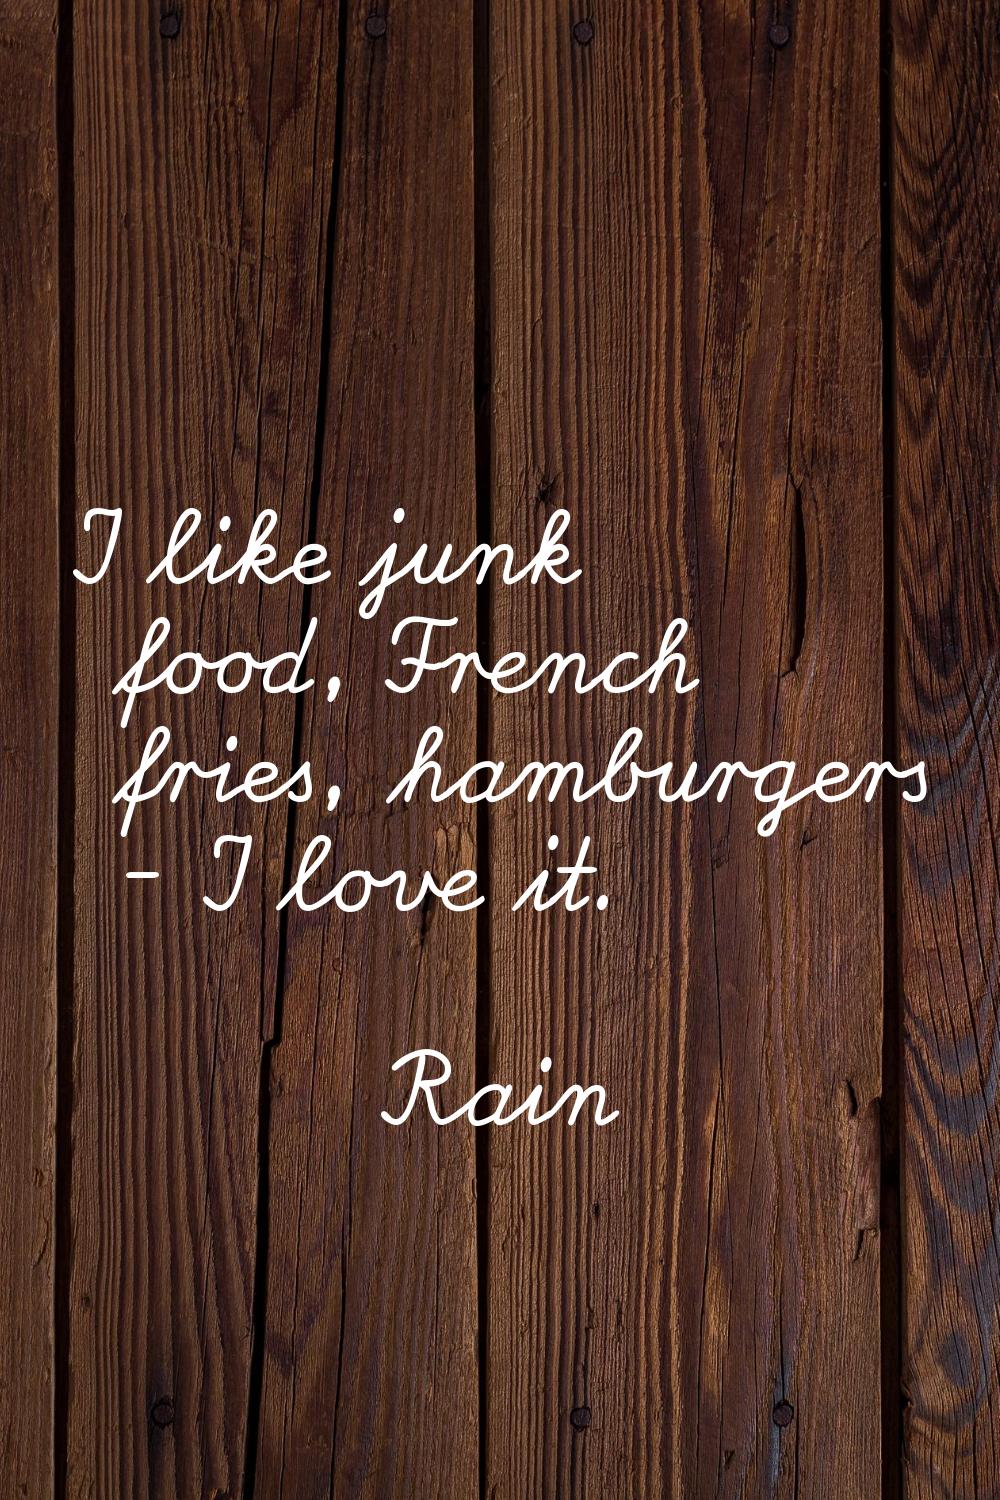 I like junk food, French fries, hamburgers - I love it.